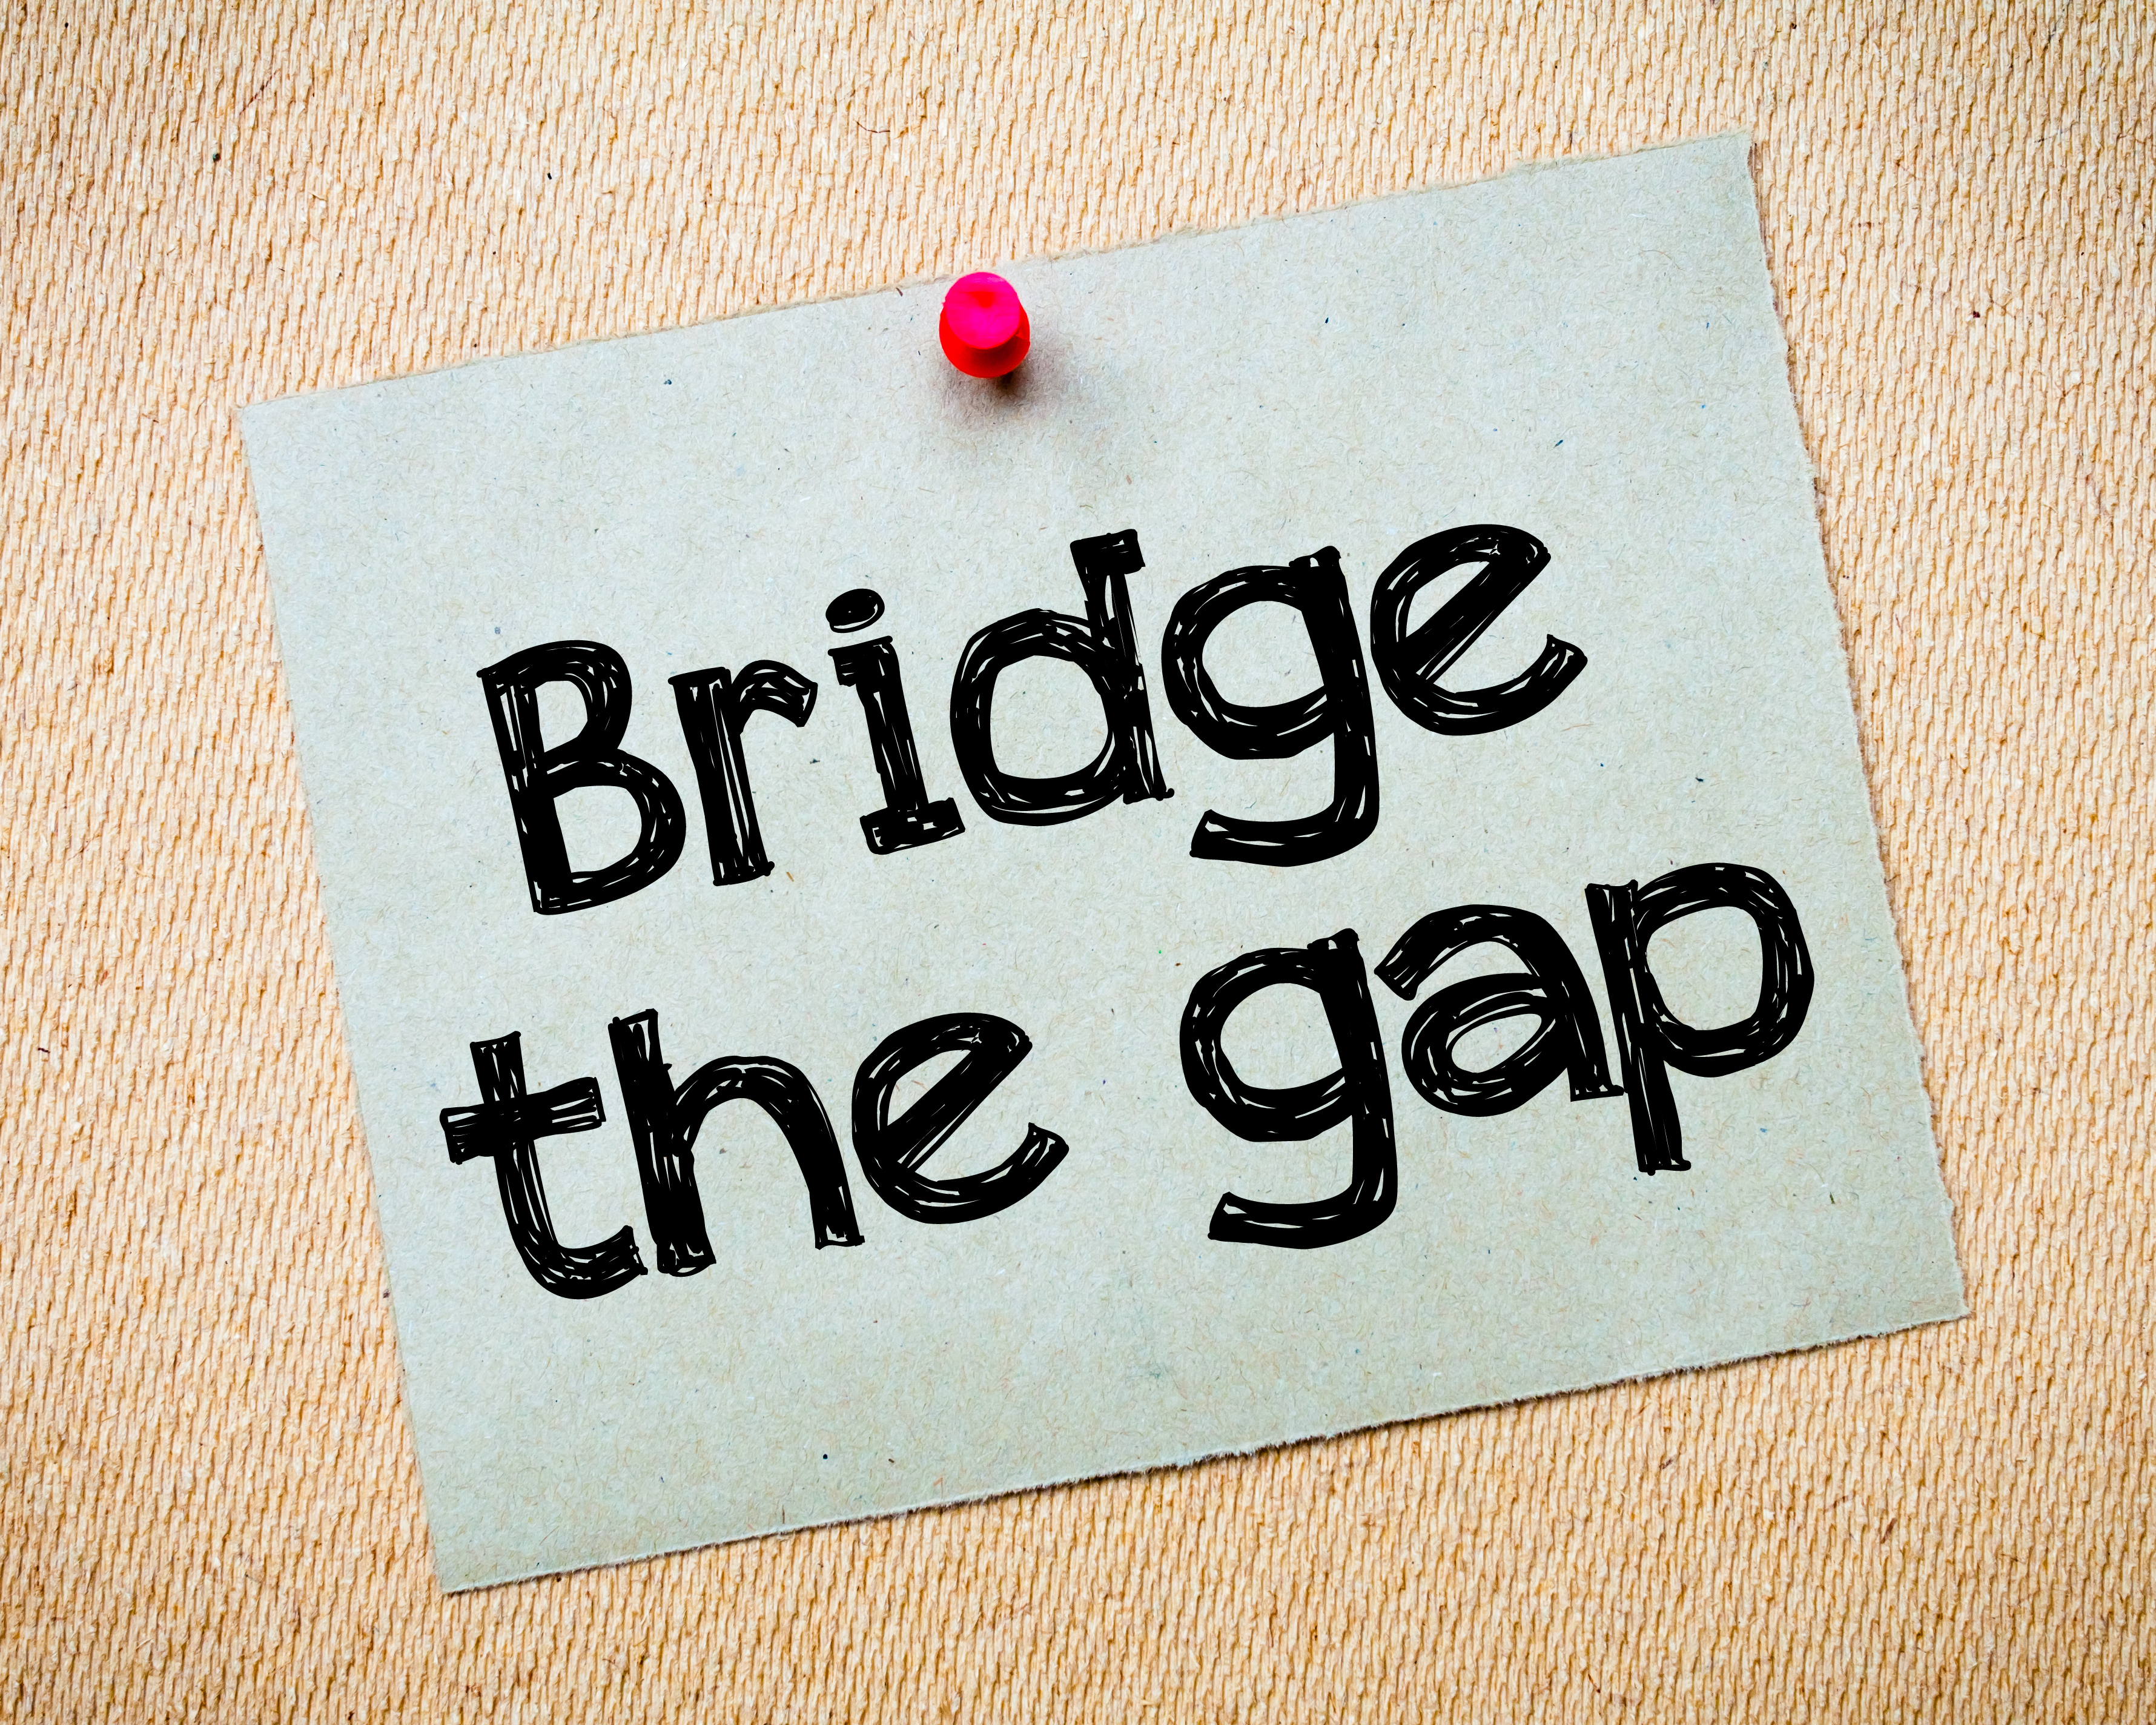 Bridge the gap pinboard sign